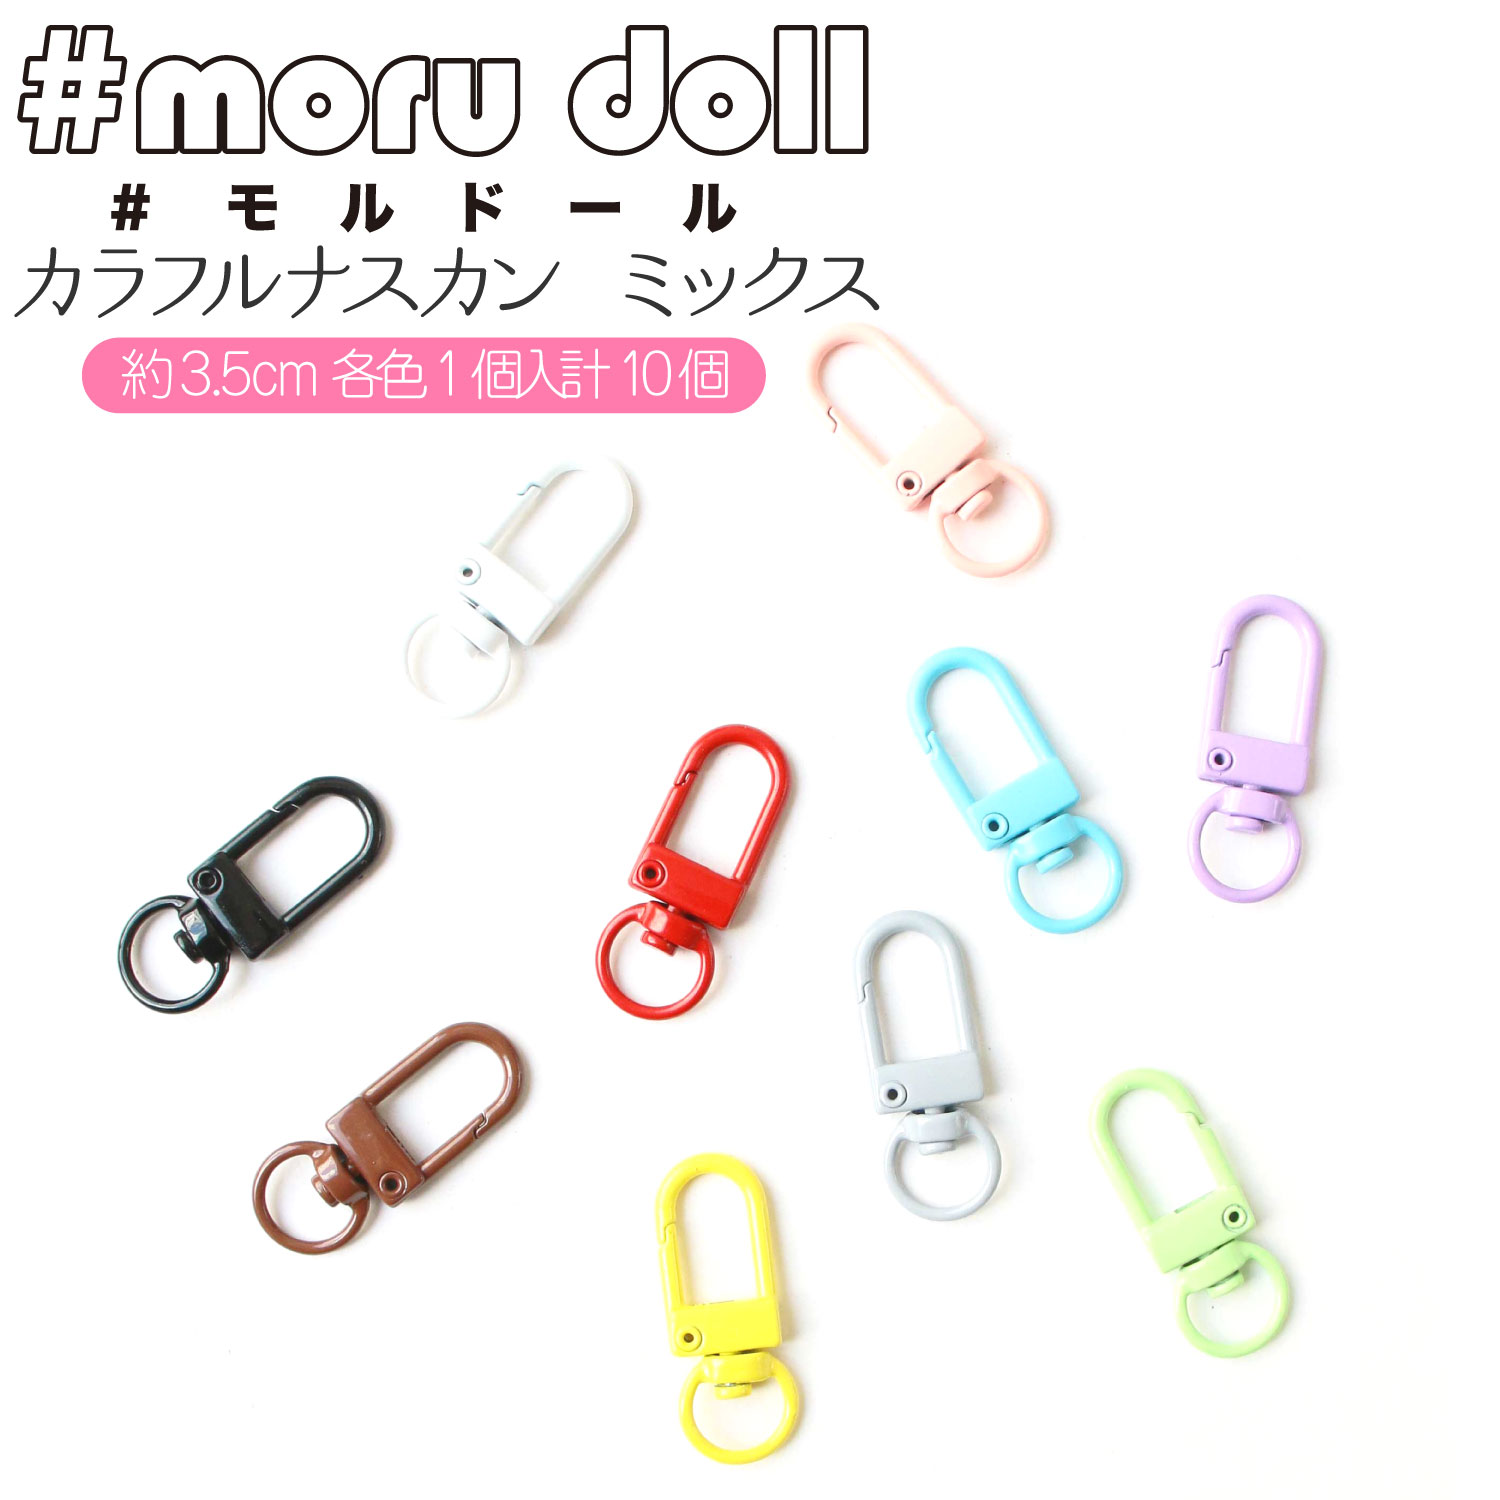 MOL-NSMIX モール人形 モールドール カラフルナスカンミックス 10個入 (袋)